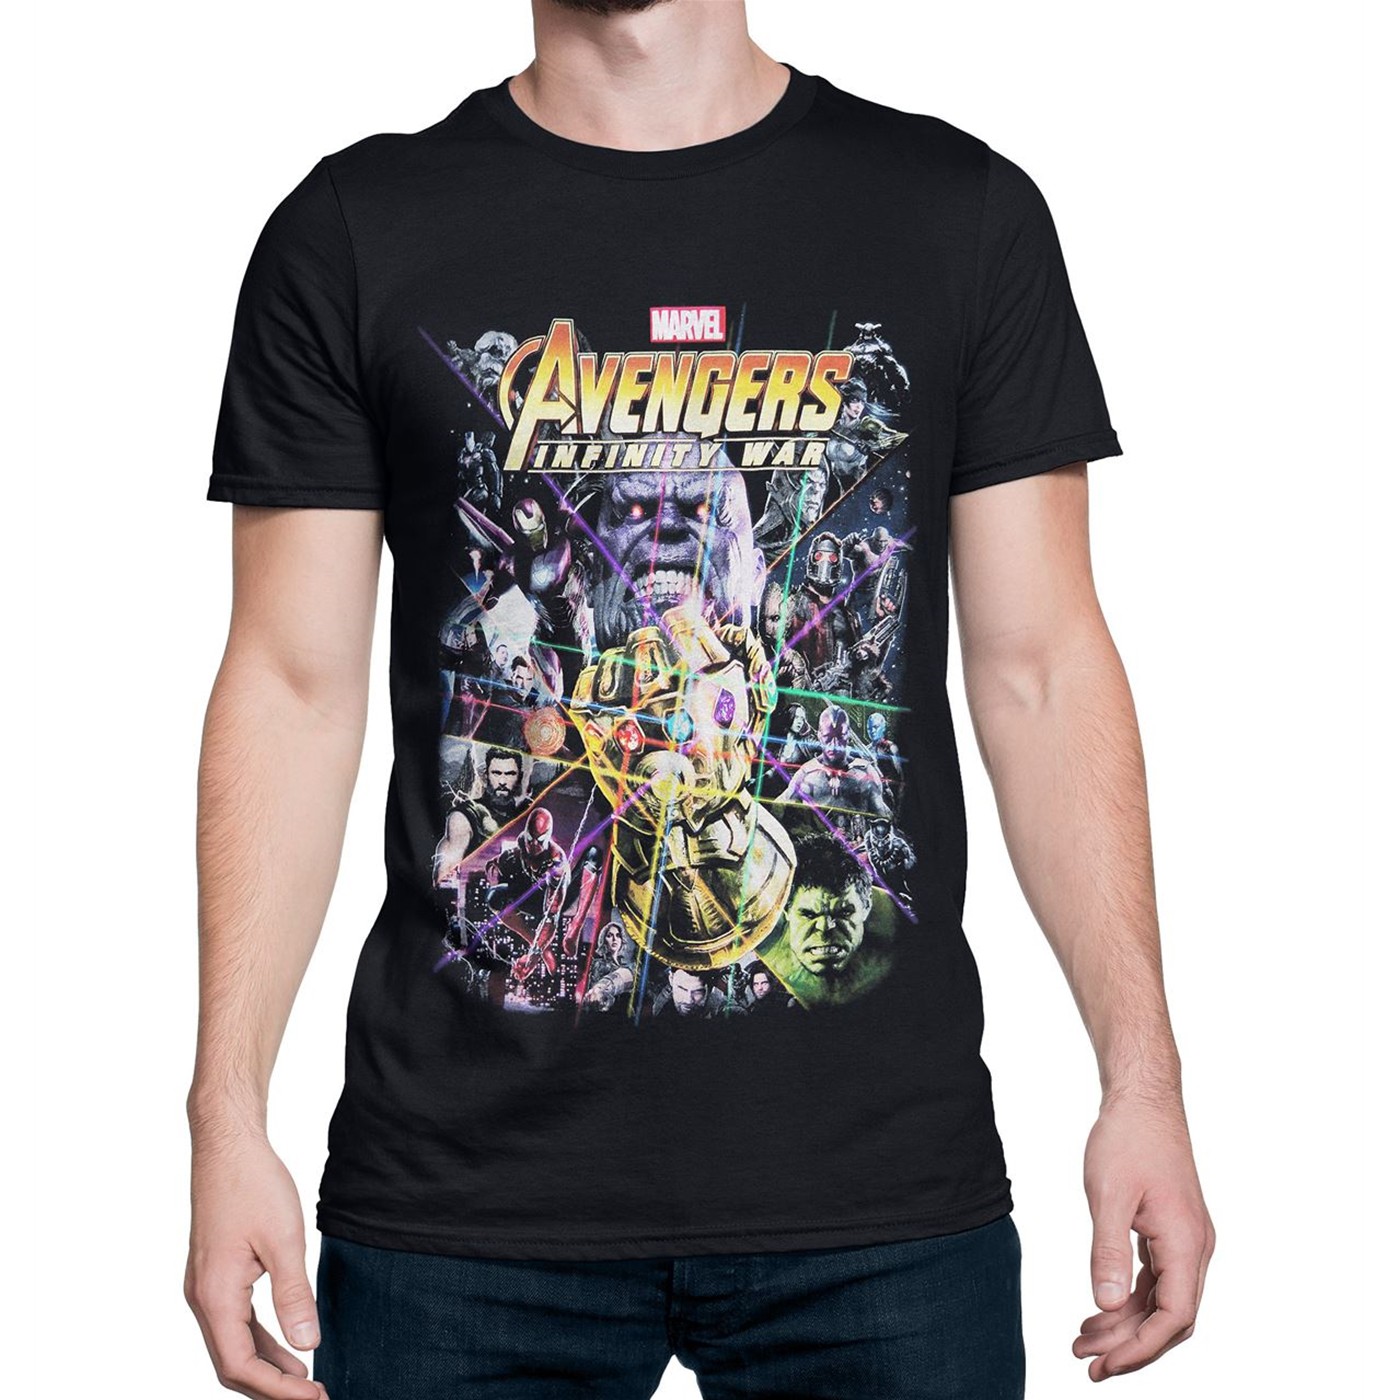 Avengers Infinity War Movie Poster Men's T-Shirt